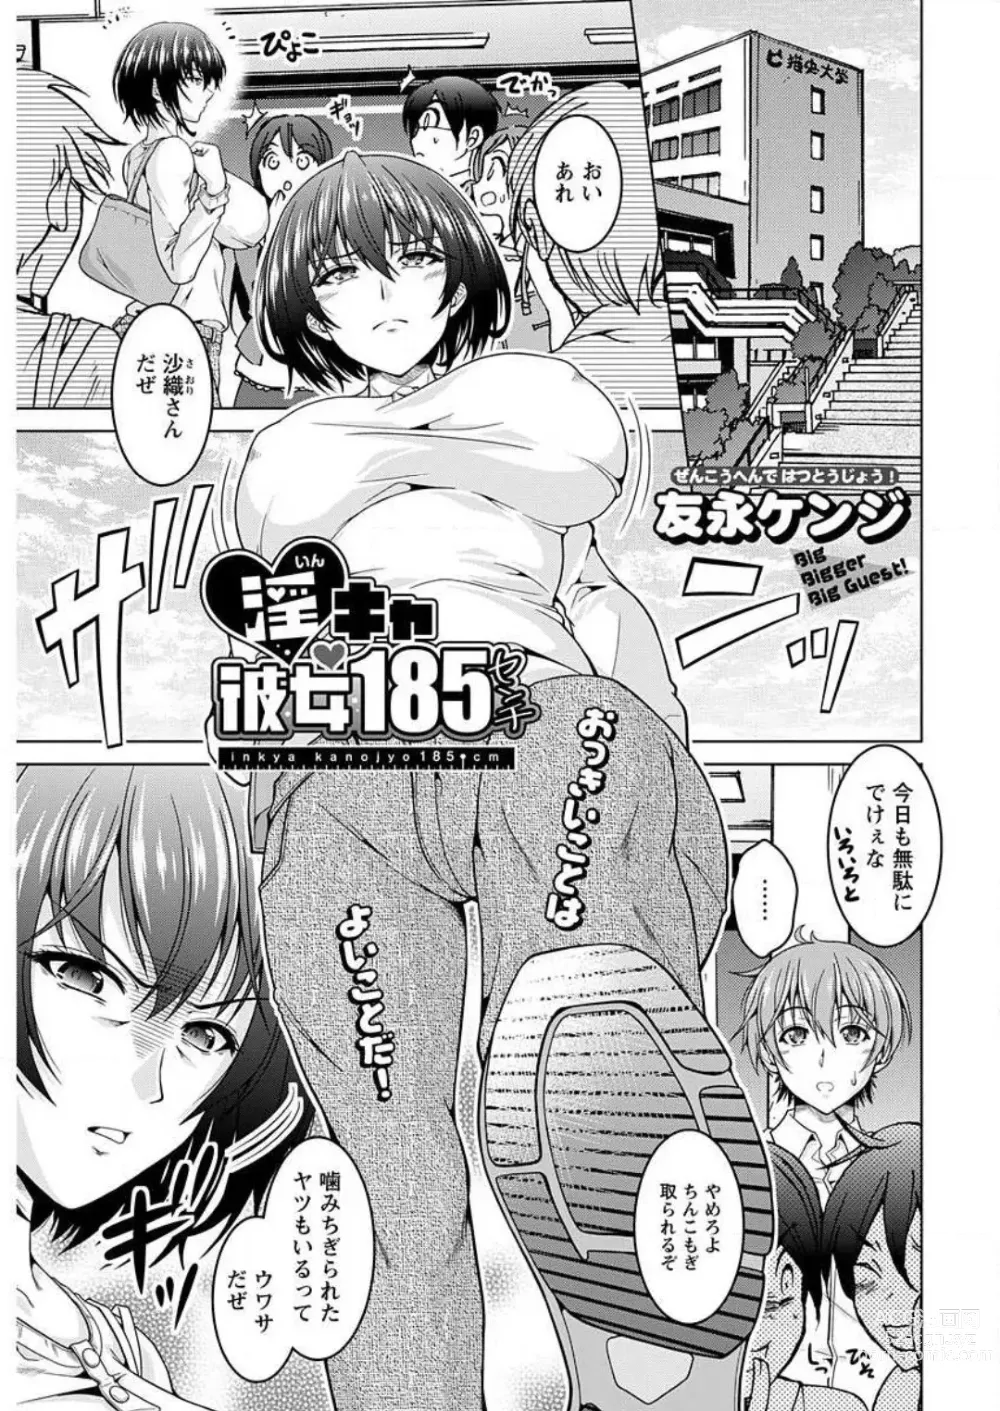 Page 1 of manga InCha Kanojo 185 Centi 1-2